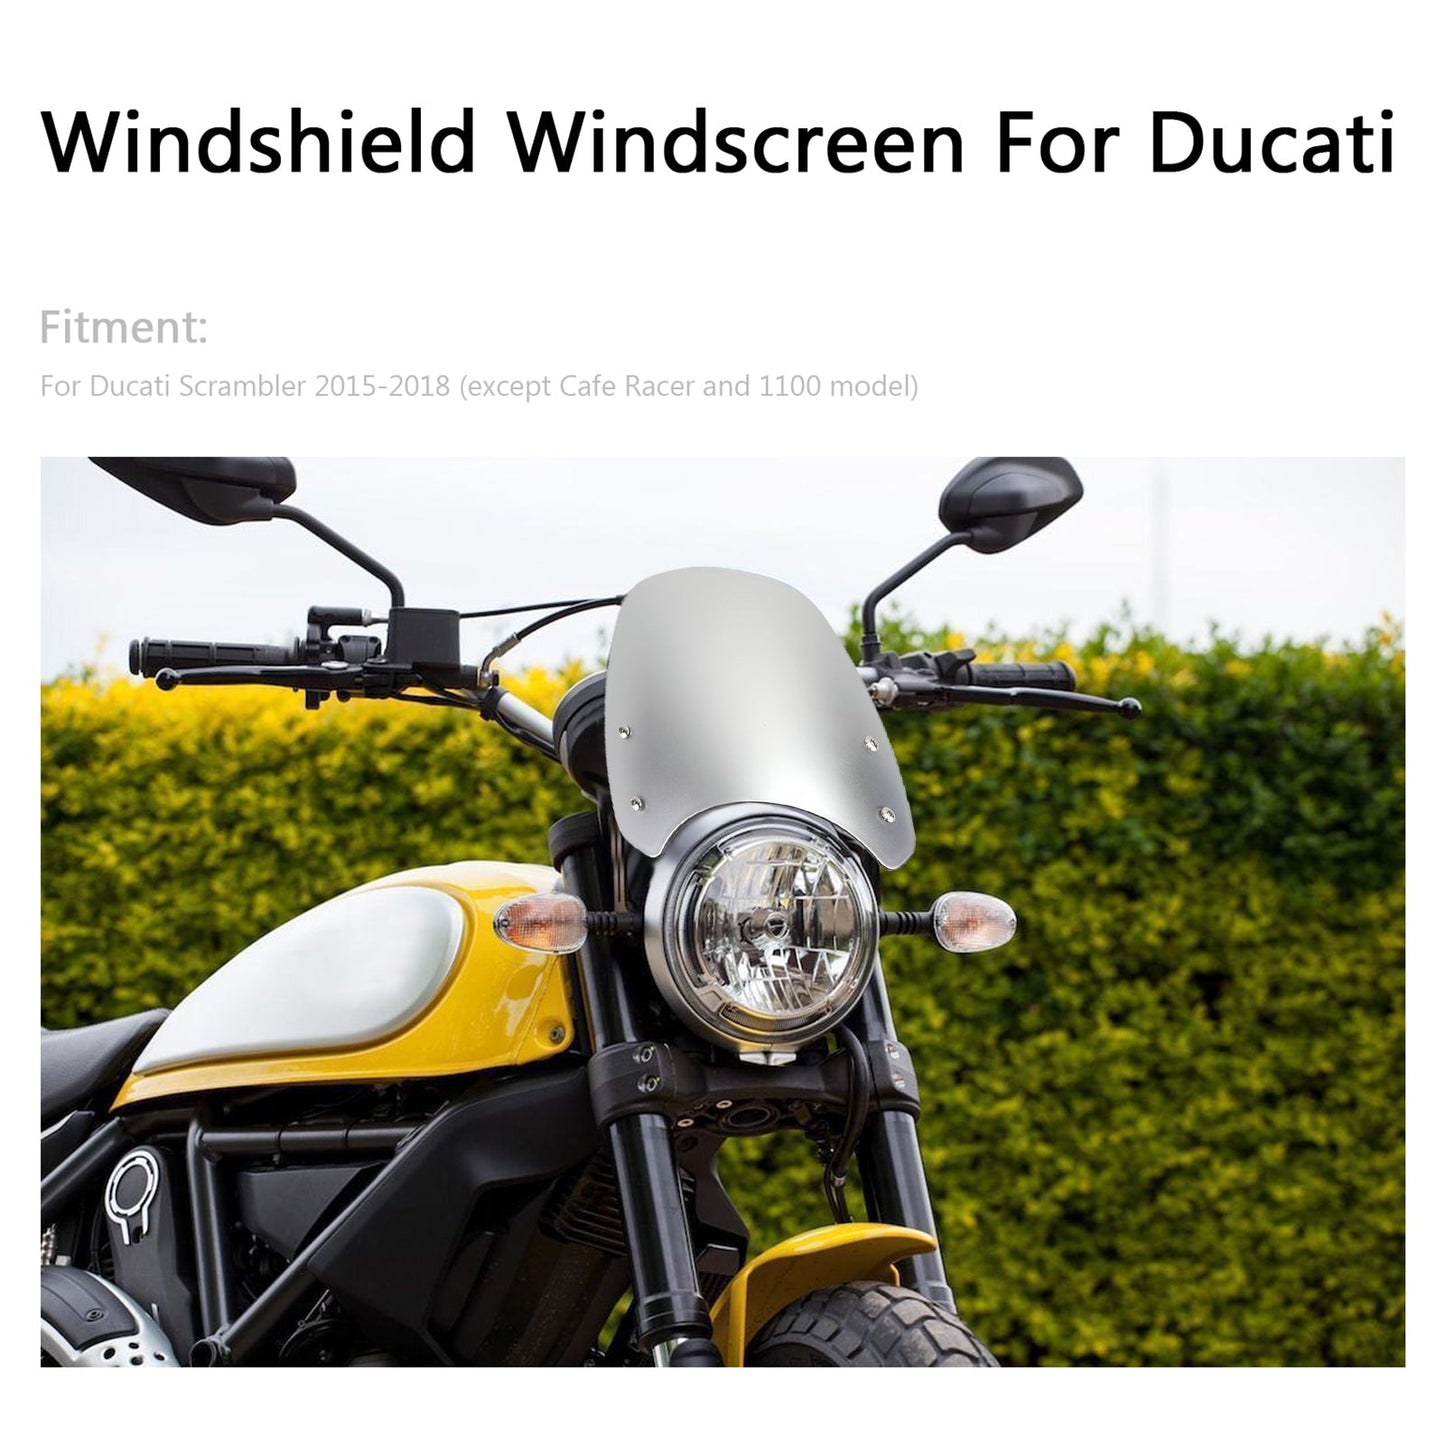 Windshield Windscreen Wind Defector protection For 15-2018 Ducati Scrambler